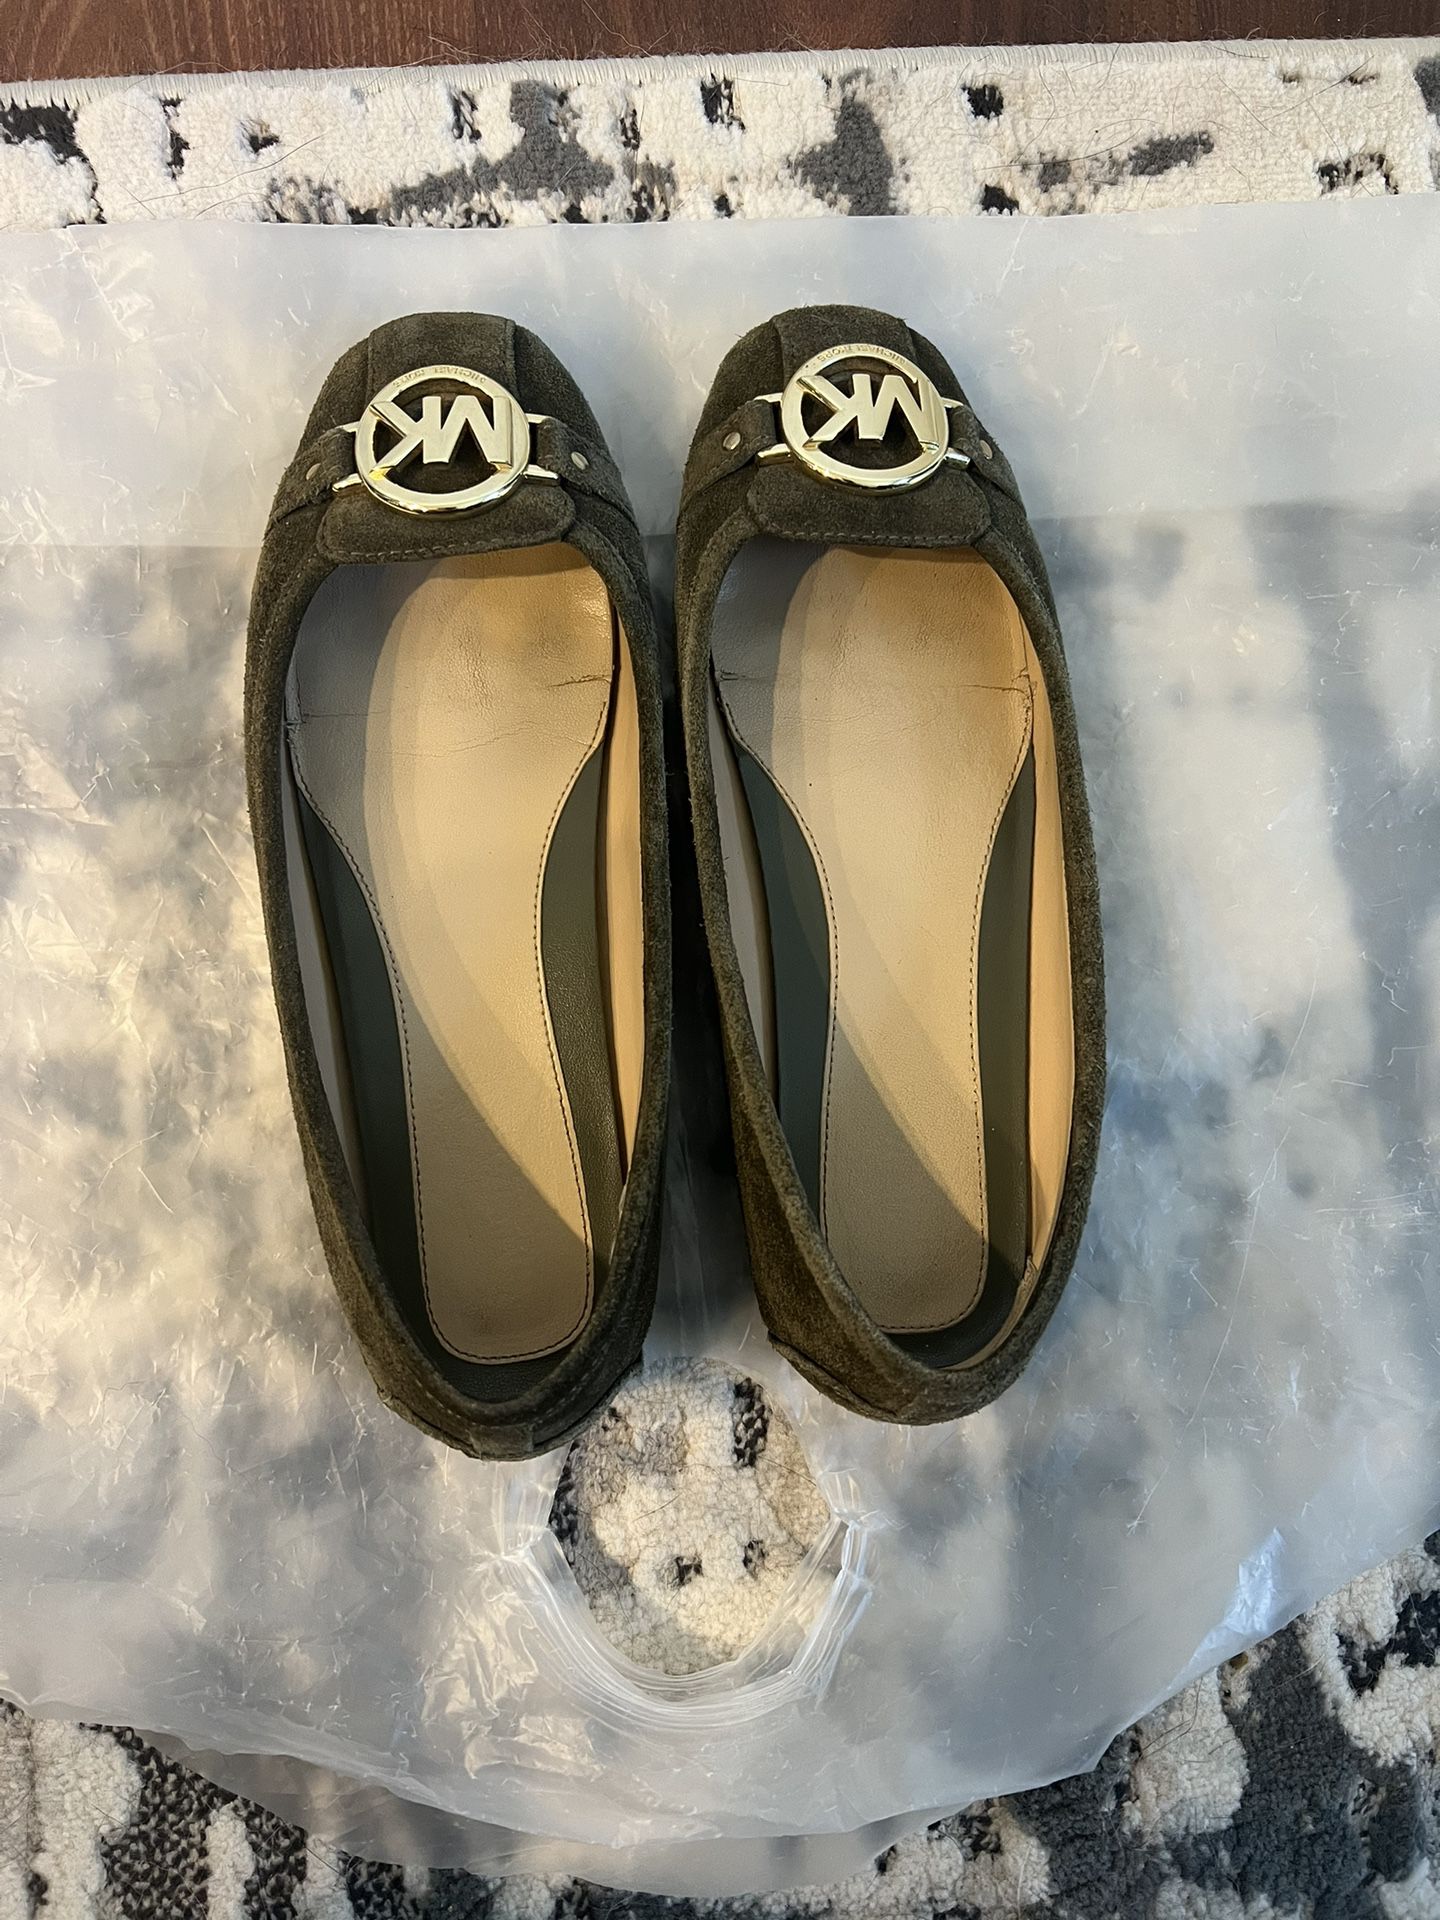 3 Women’s Shoes Heels Flats 6.5